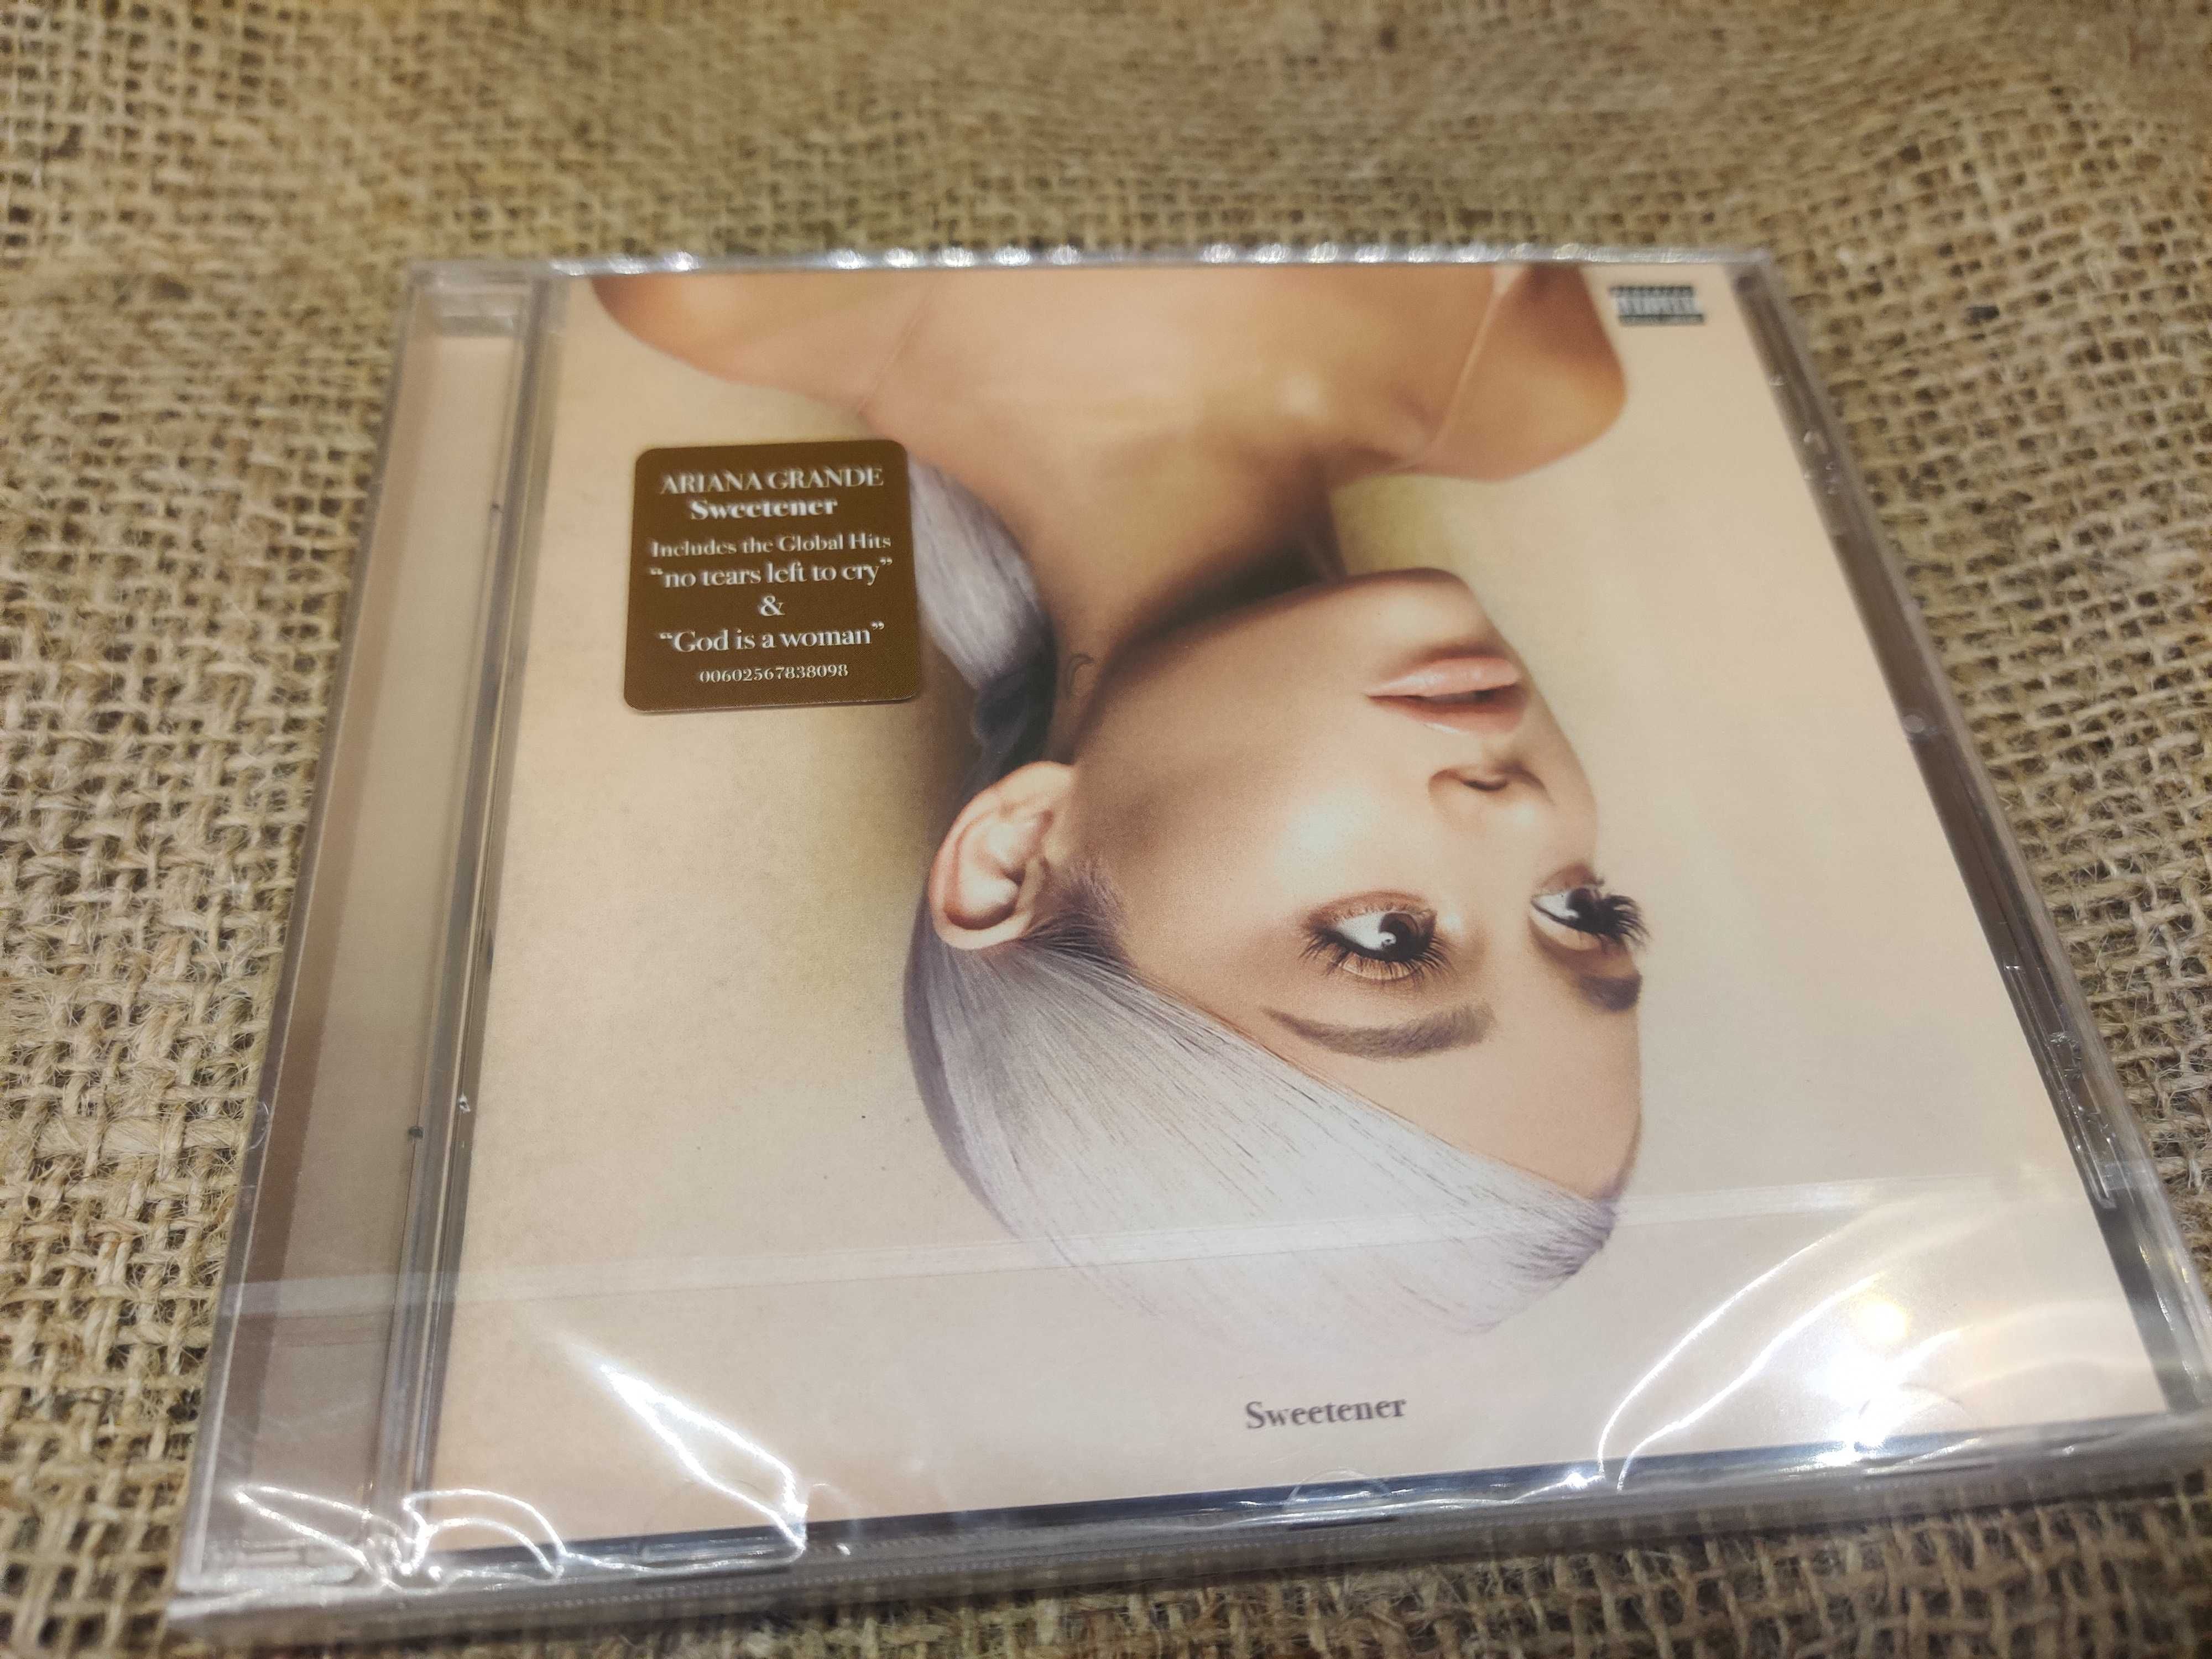 Grande Ariana - Sweetener, nowa płyta CD